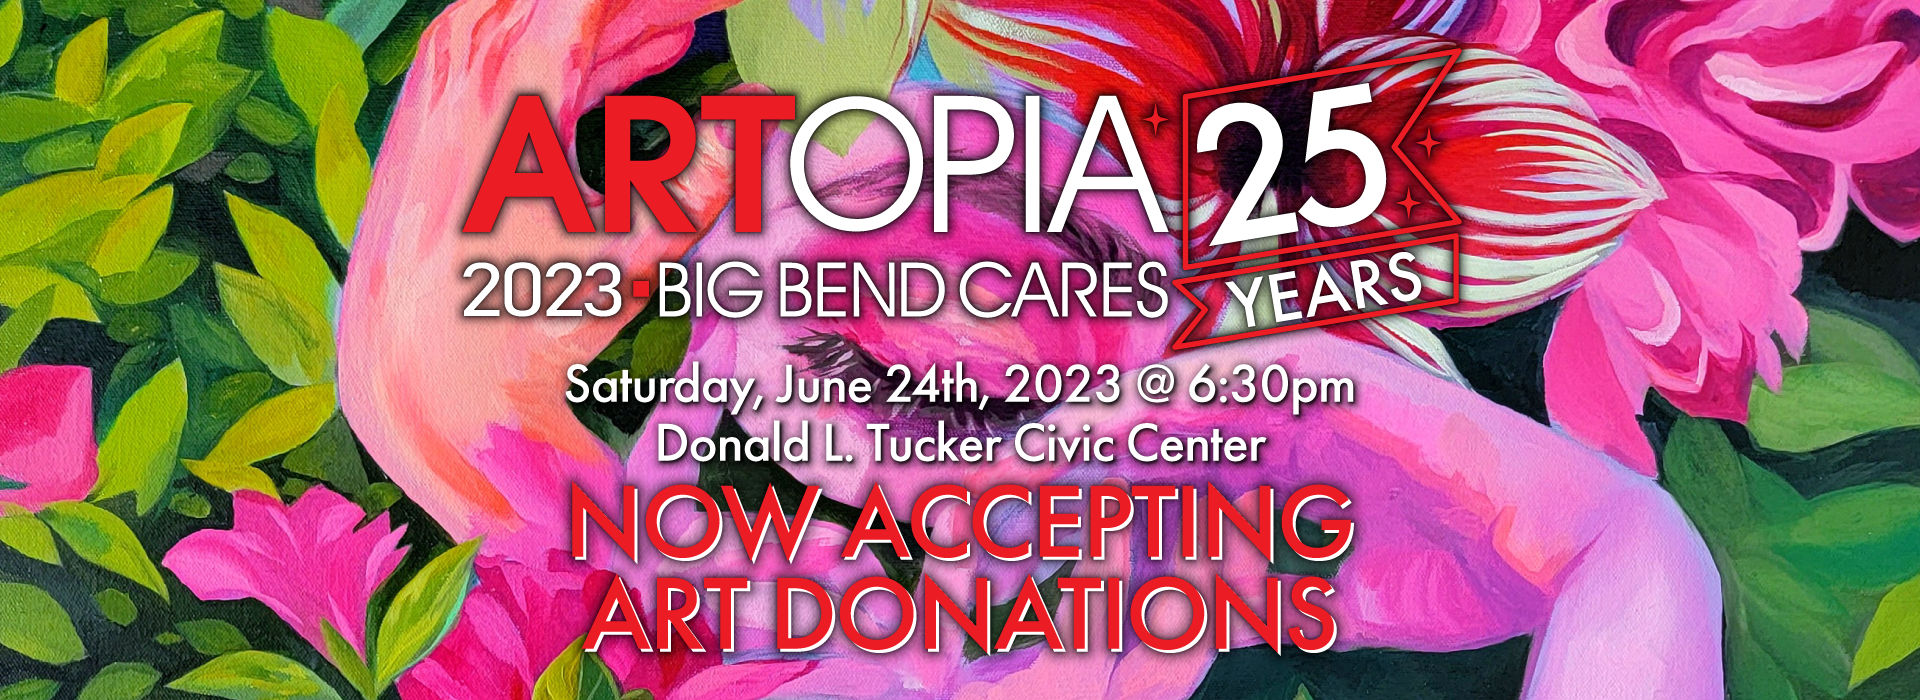 Now Accepting Art Donations Artopia 2023 LayerSlider